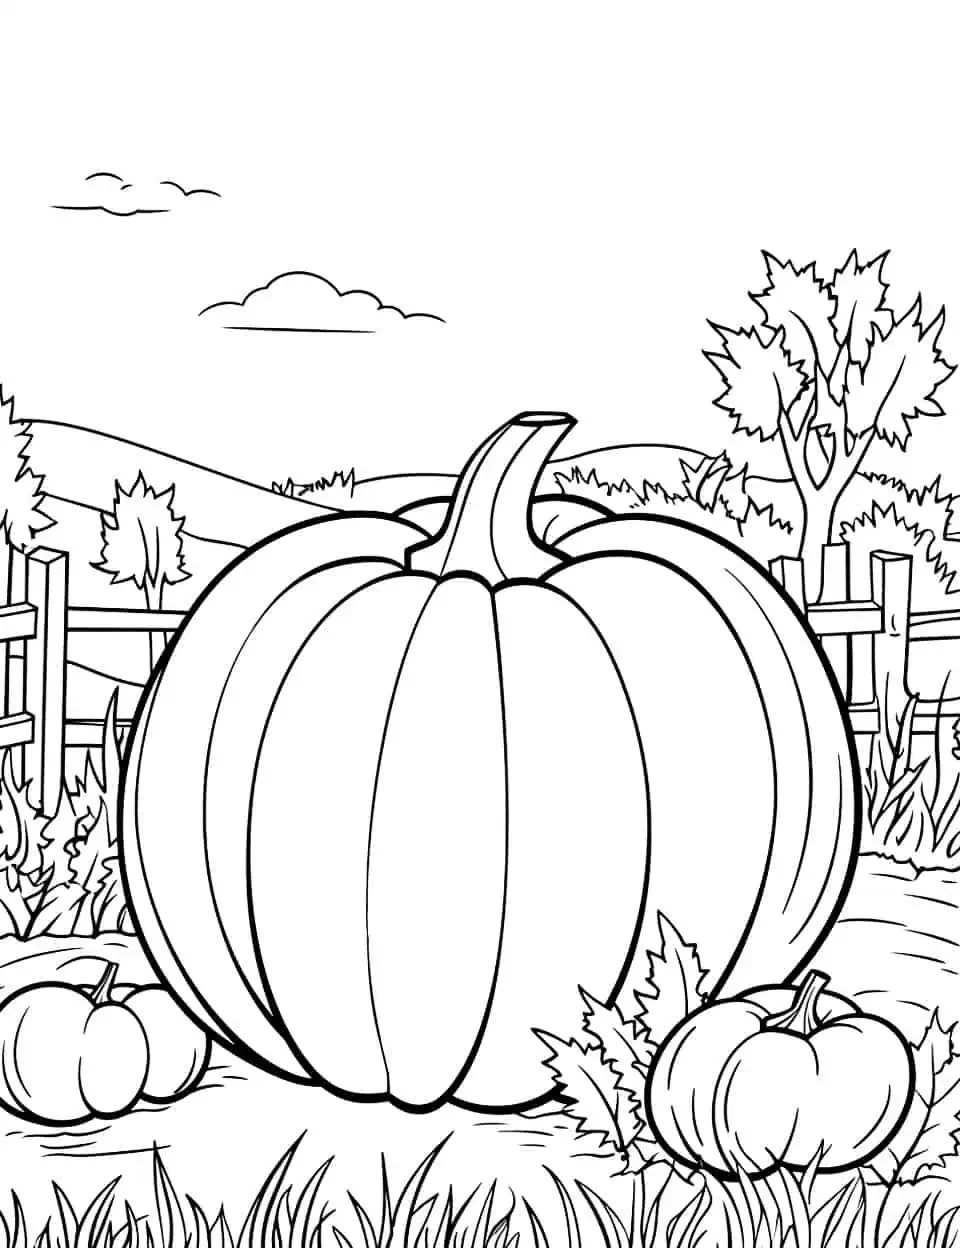 Pumpkin coloring pages free printable sheets